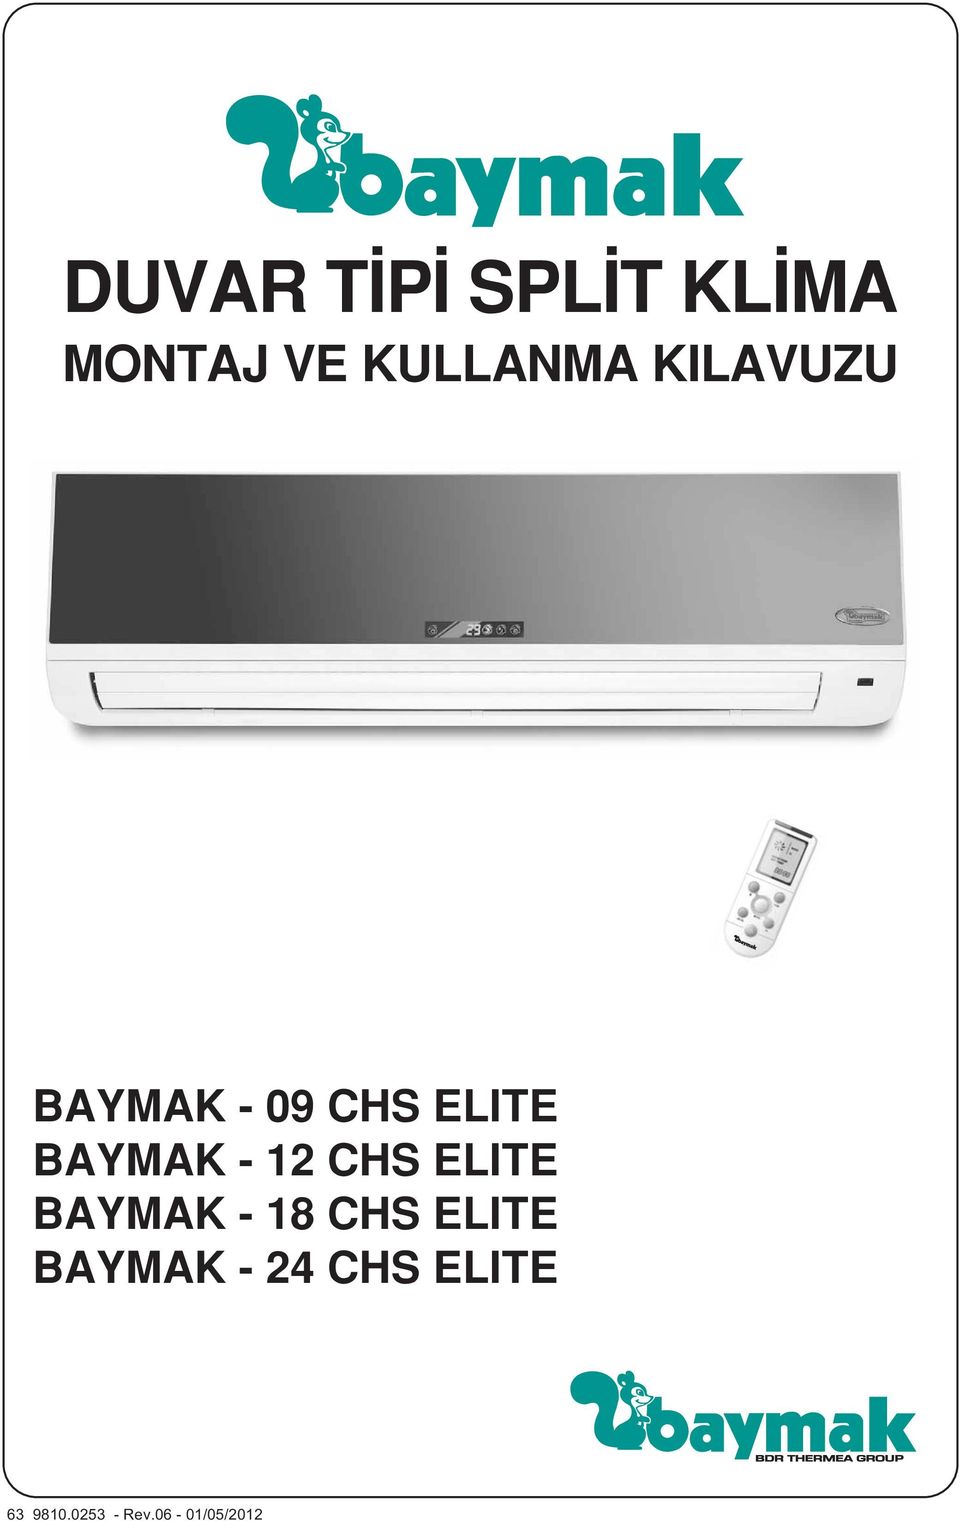 ELITE BAYMAK - 12 CHS ELITE BAYMAK